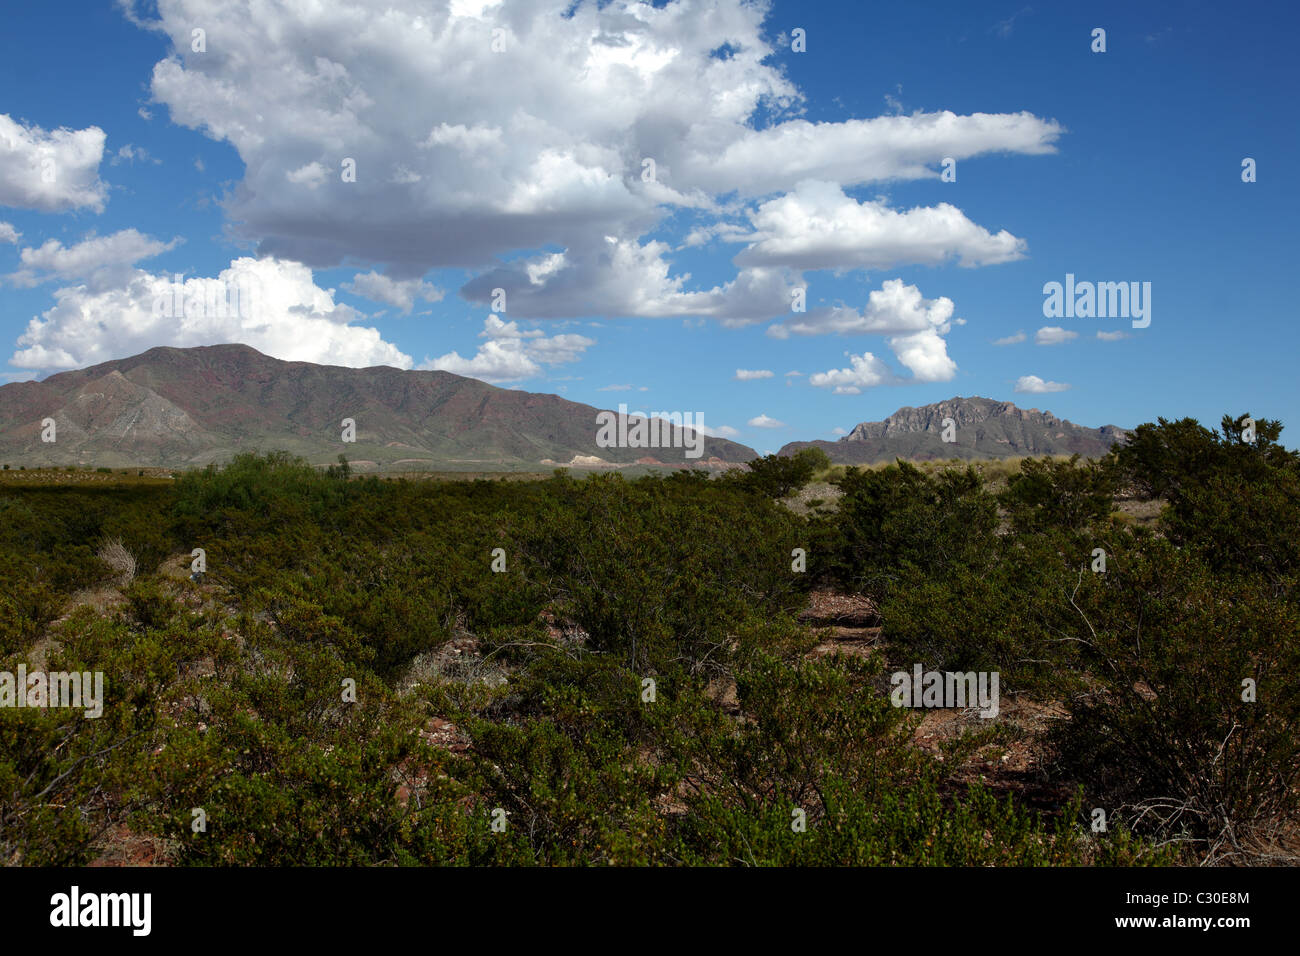 Montagne di El Paso, Texas con cielo nuvoloso Foto Stock